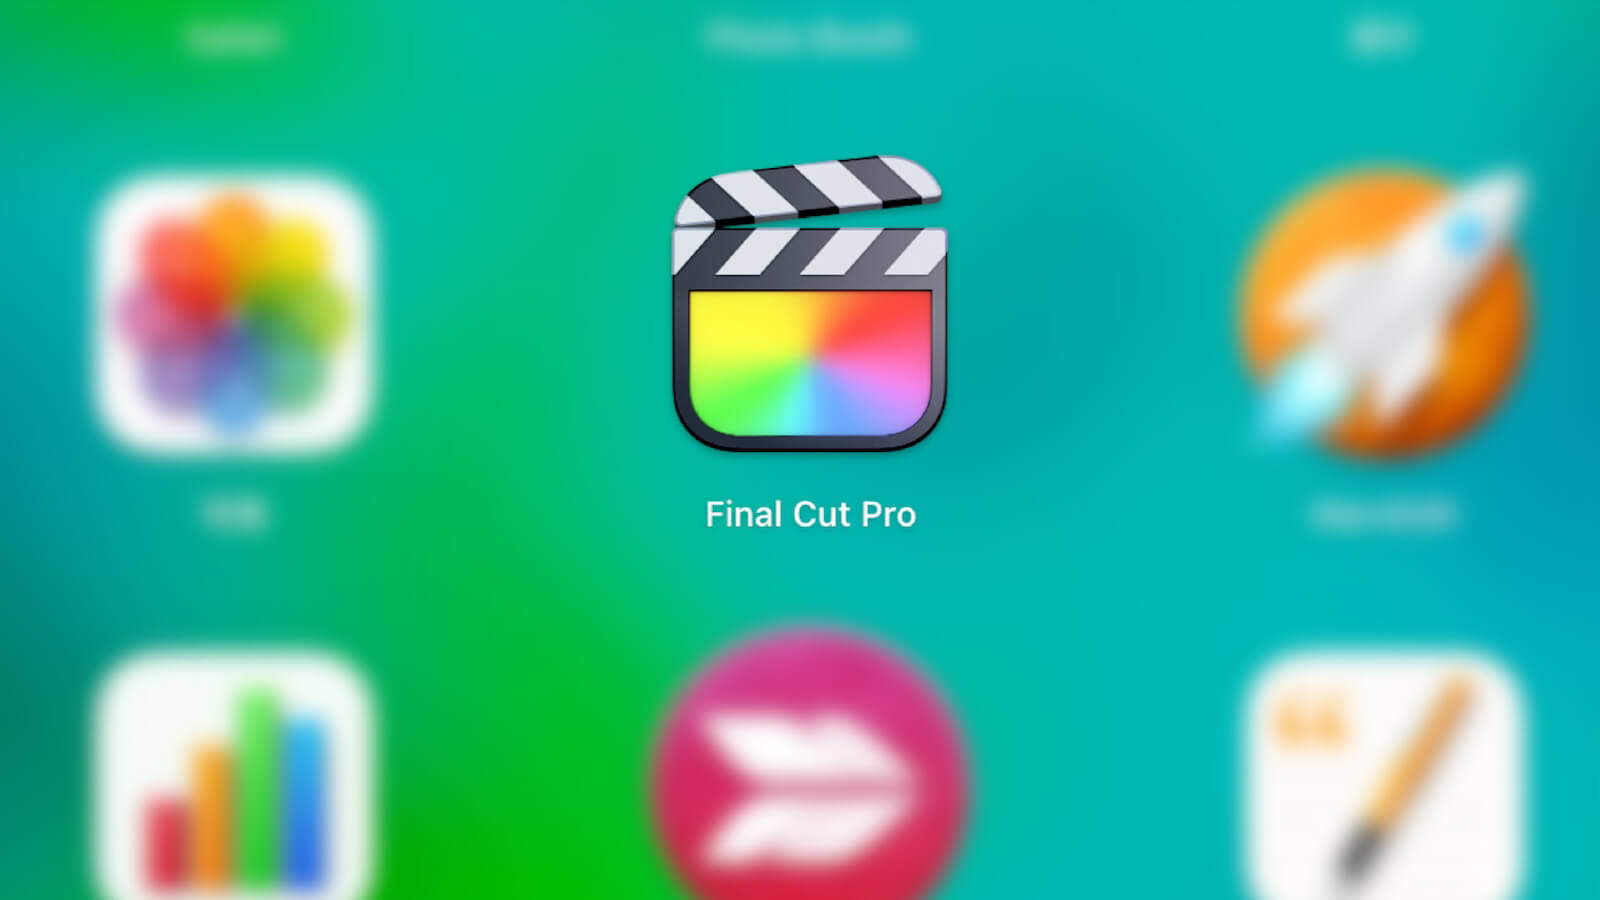 Image of Final Cut Pro logo